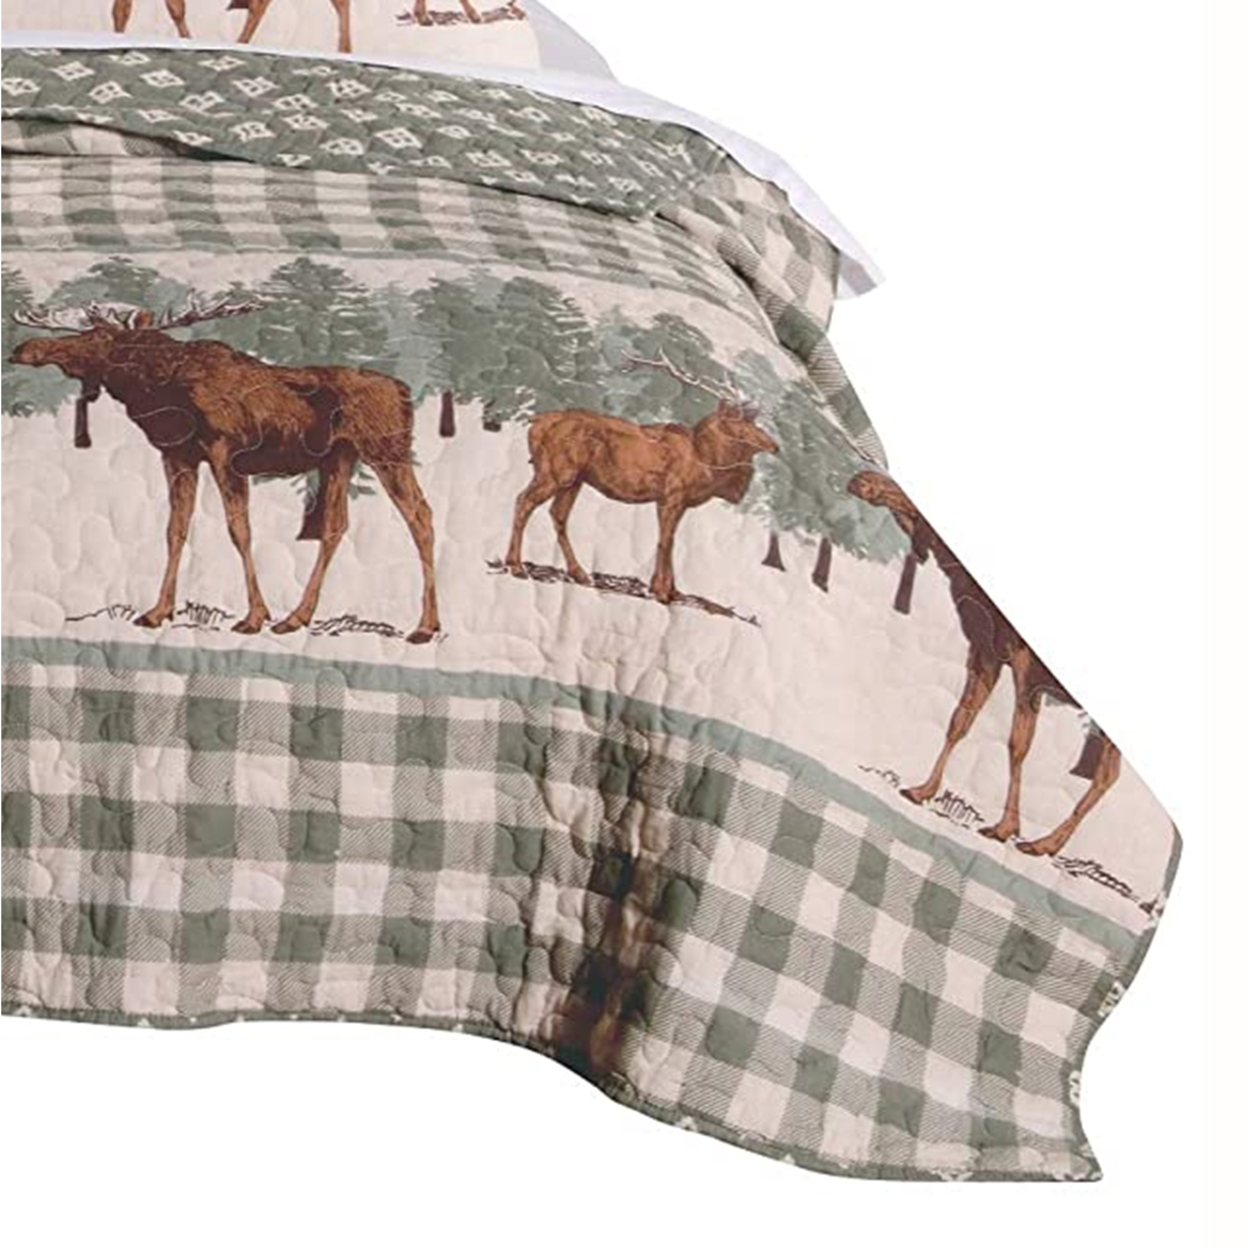 2 Piece Twin Quilt Set, Animal Print, Plaid Pattern, Green And Brown- Saltoro Sherpi